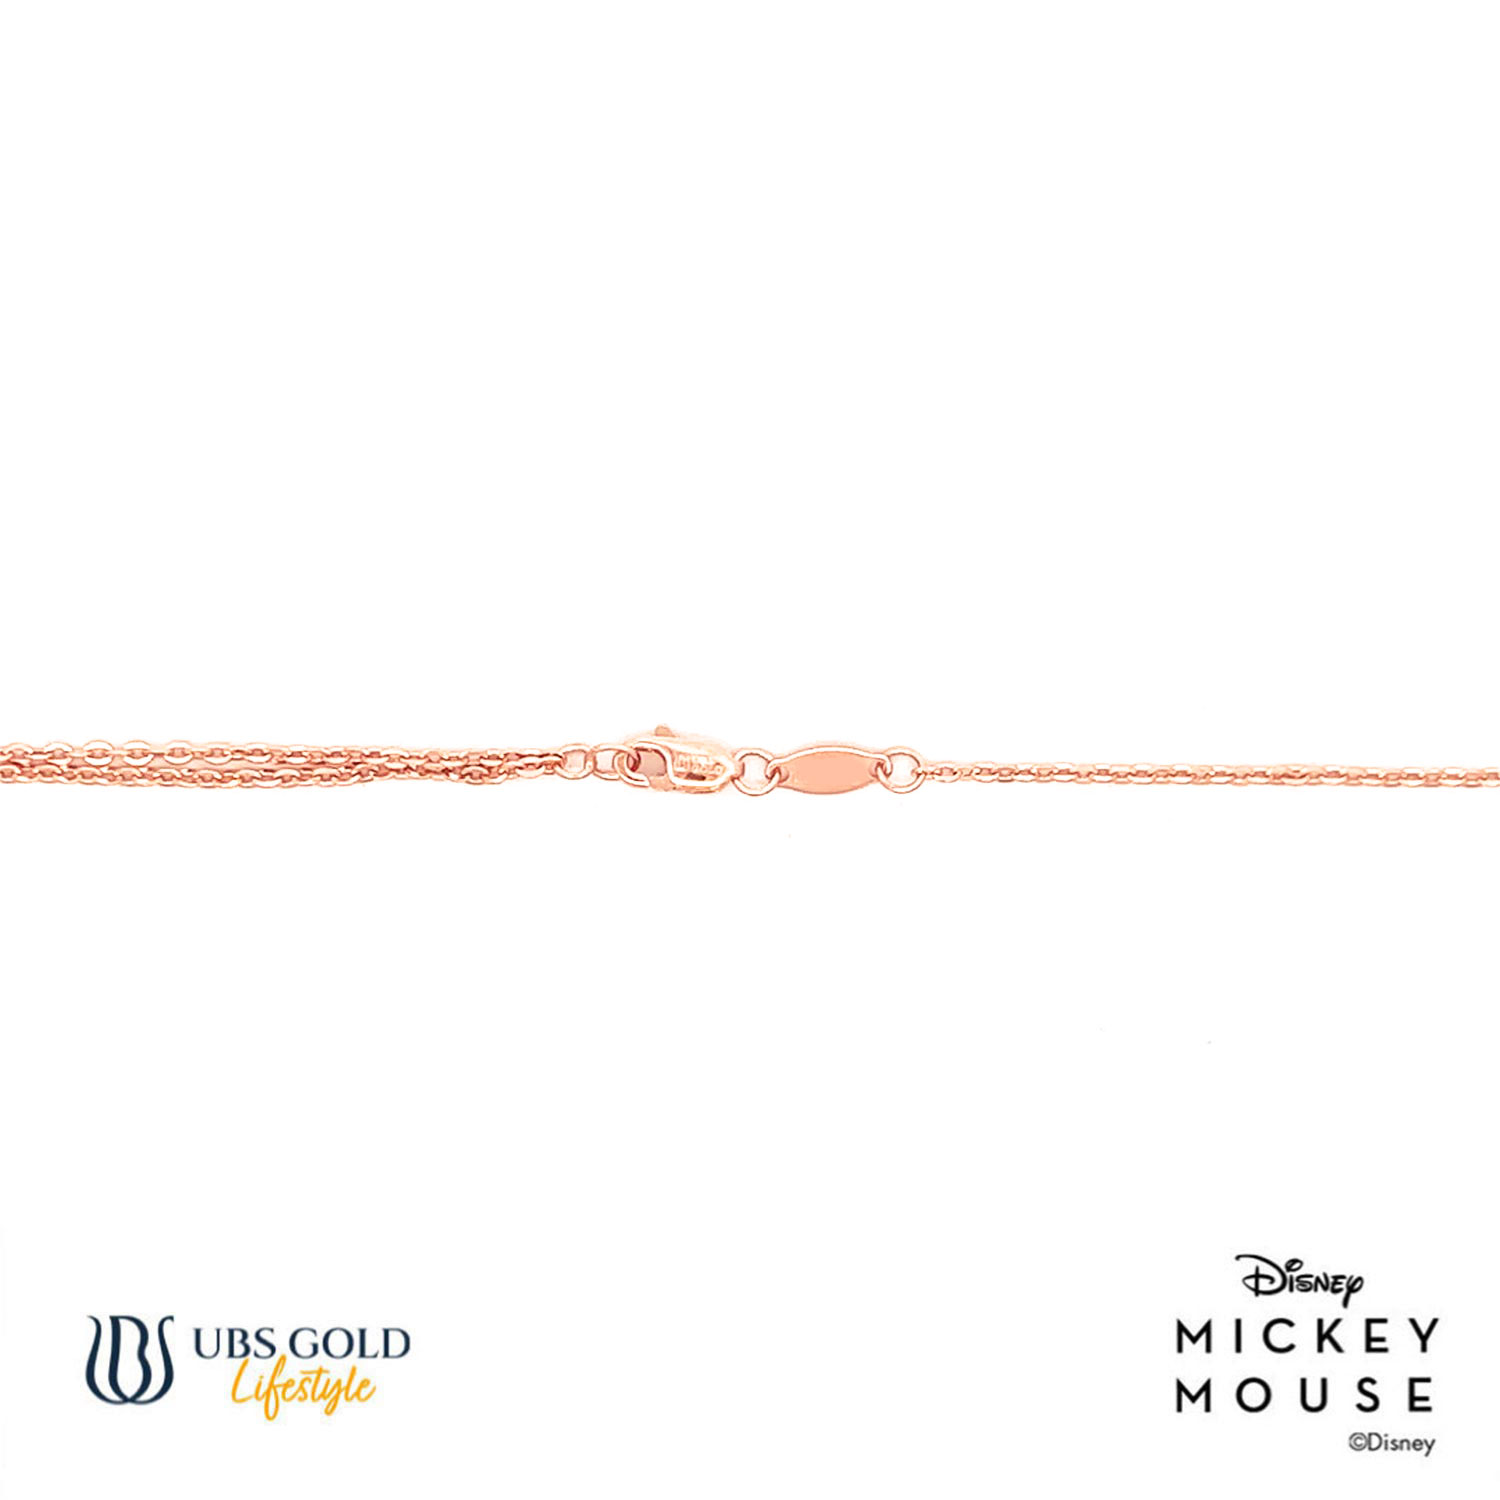 UBS Gold Kalung Emas Disney Mickey Mouse - Hky0241 - 17K